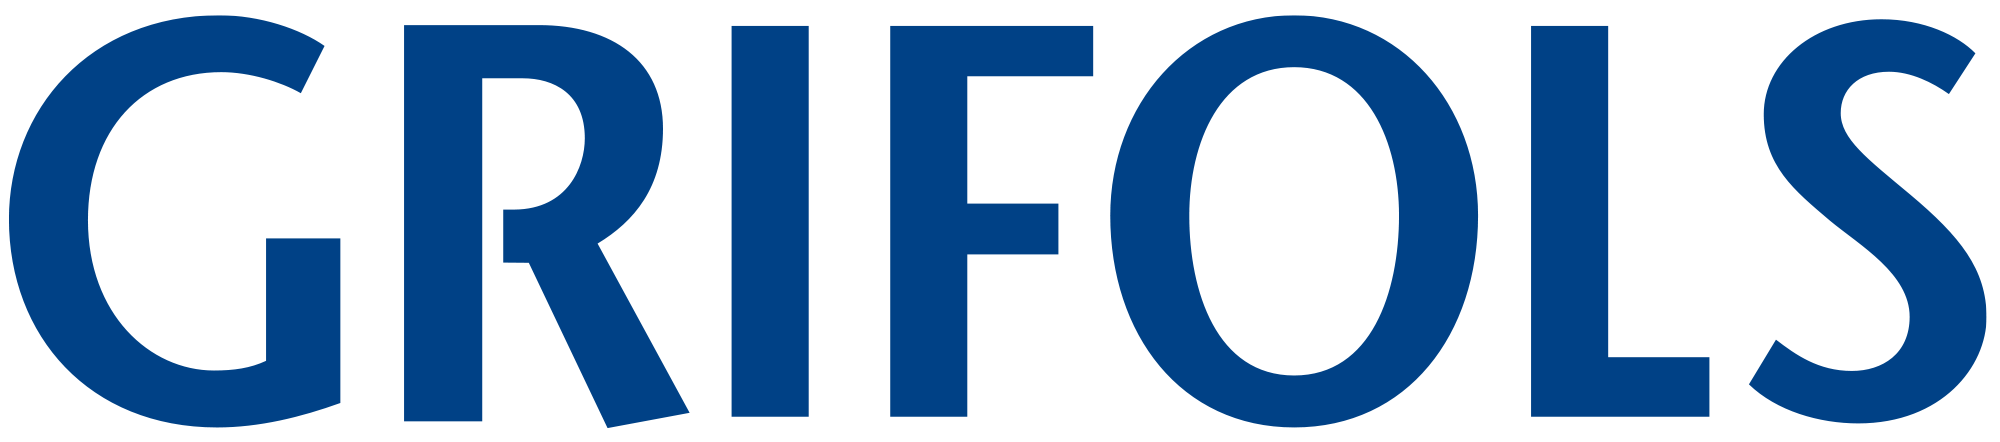 grifols_logo